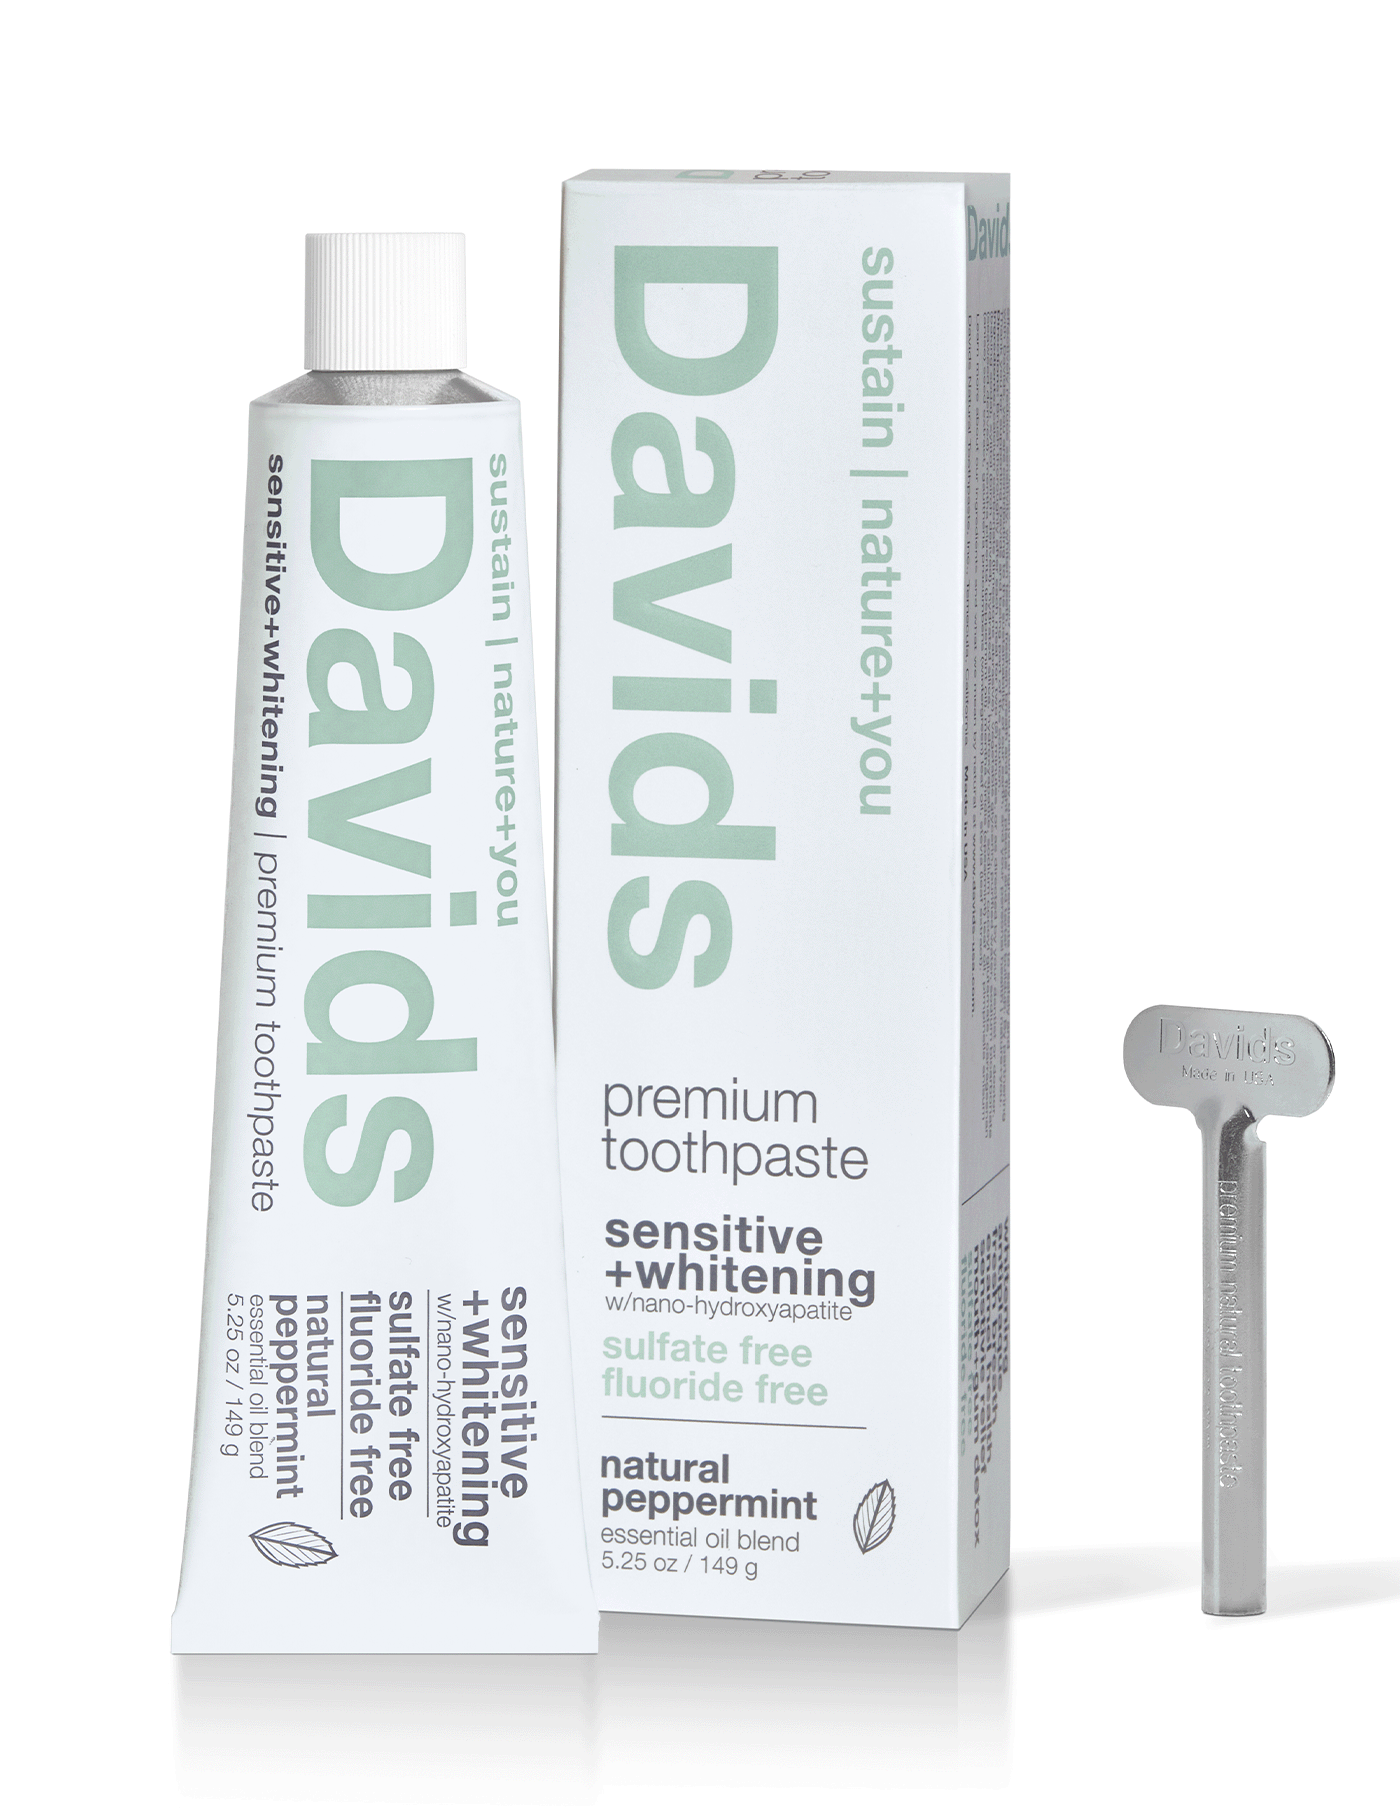 Davids Sensitive + Whitening Nano-Hydroxyapatite Premium Toothpaste - Peppermint